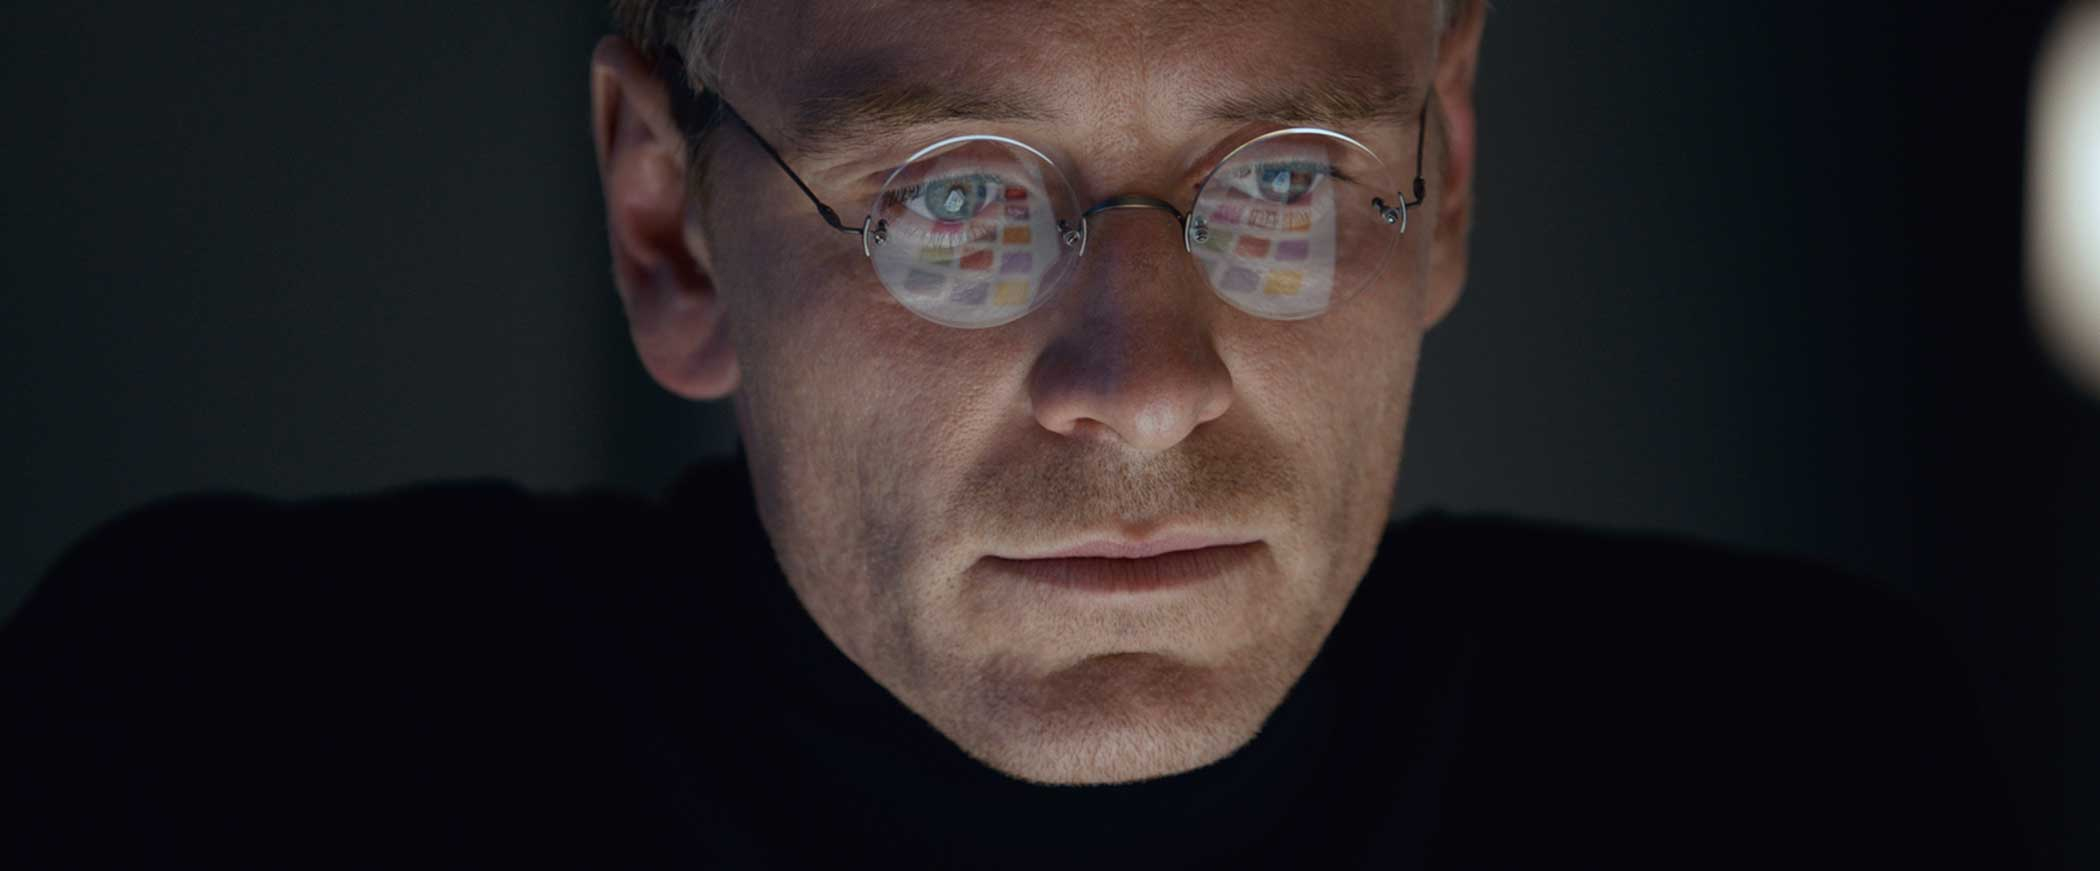 Film Title: Steve Jobs